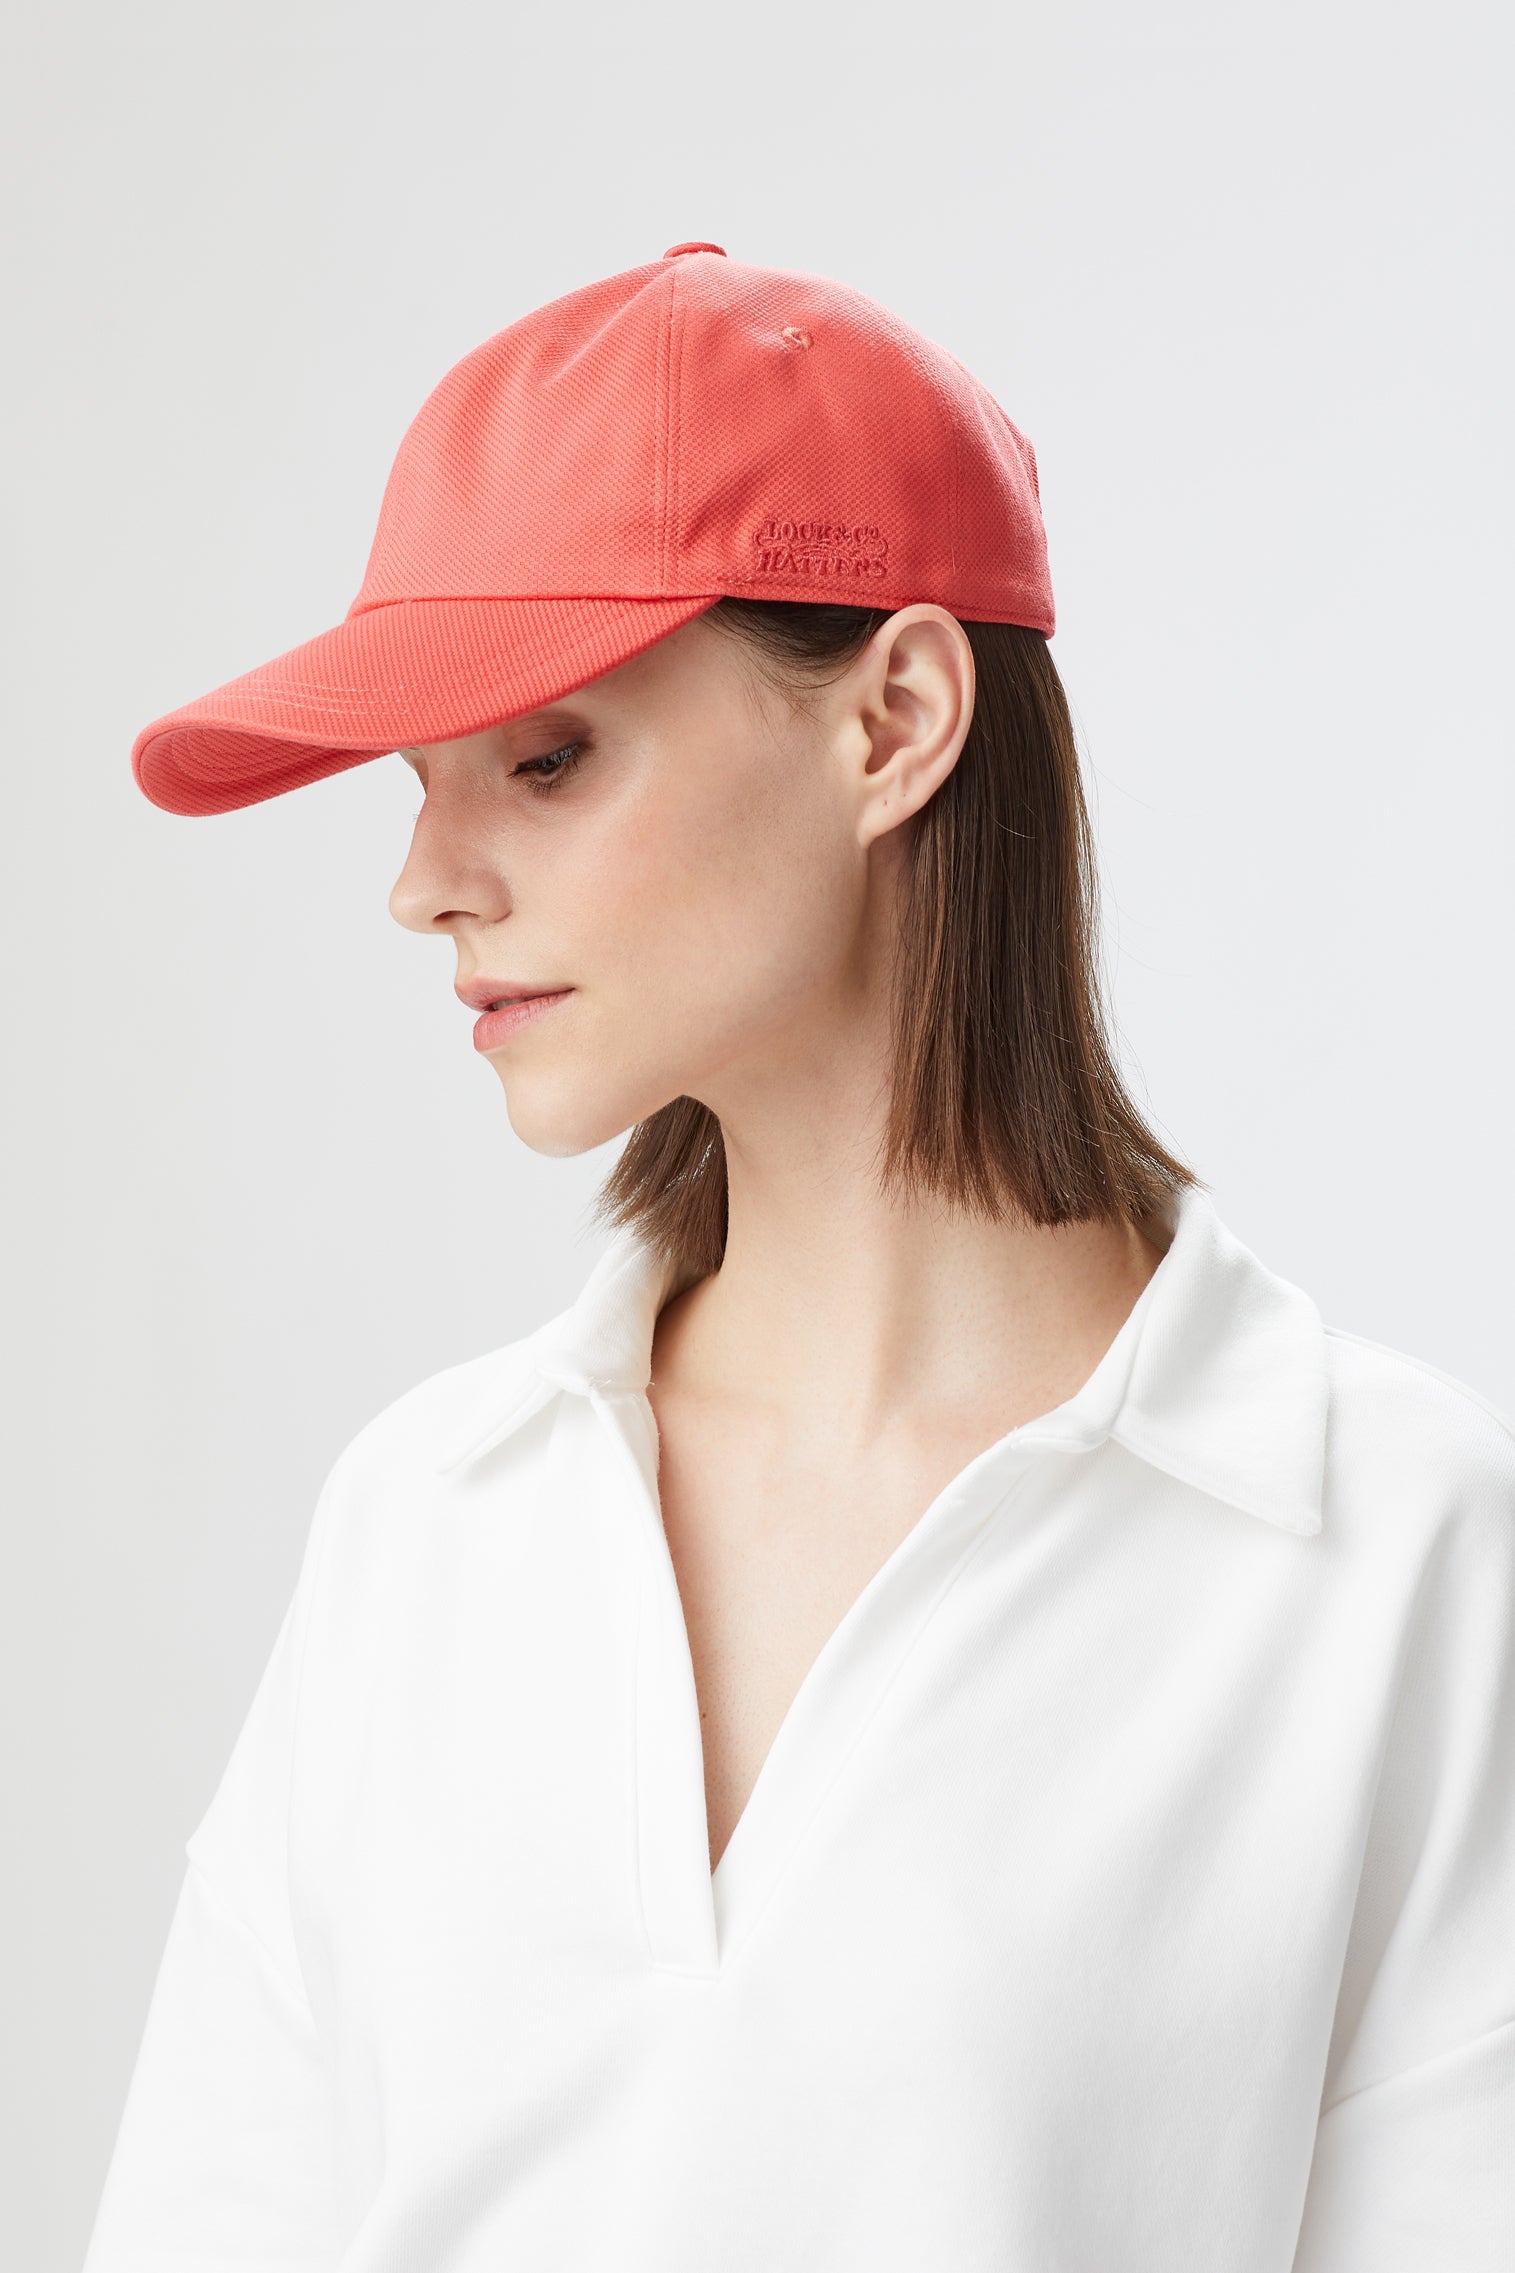 Adjustable Coral Baseball Cap - Women’s Hats - Lock & Co. Hatters London UK